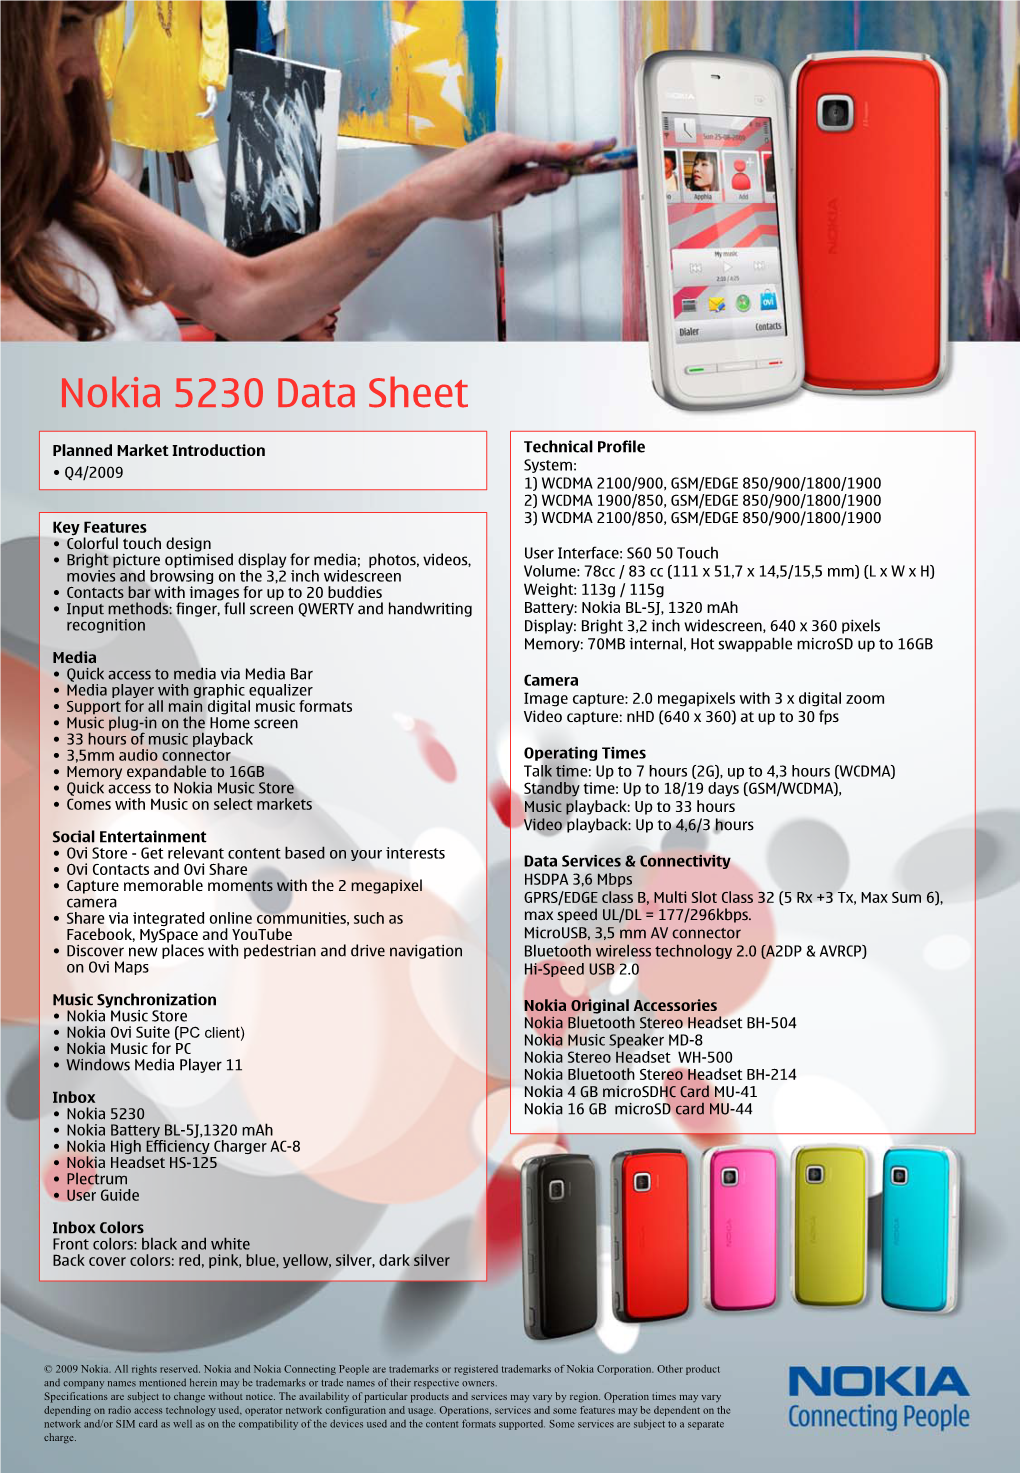 Nokia 5230 Data Sheet